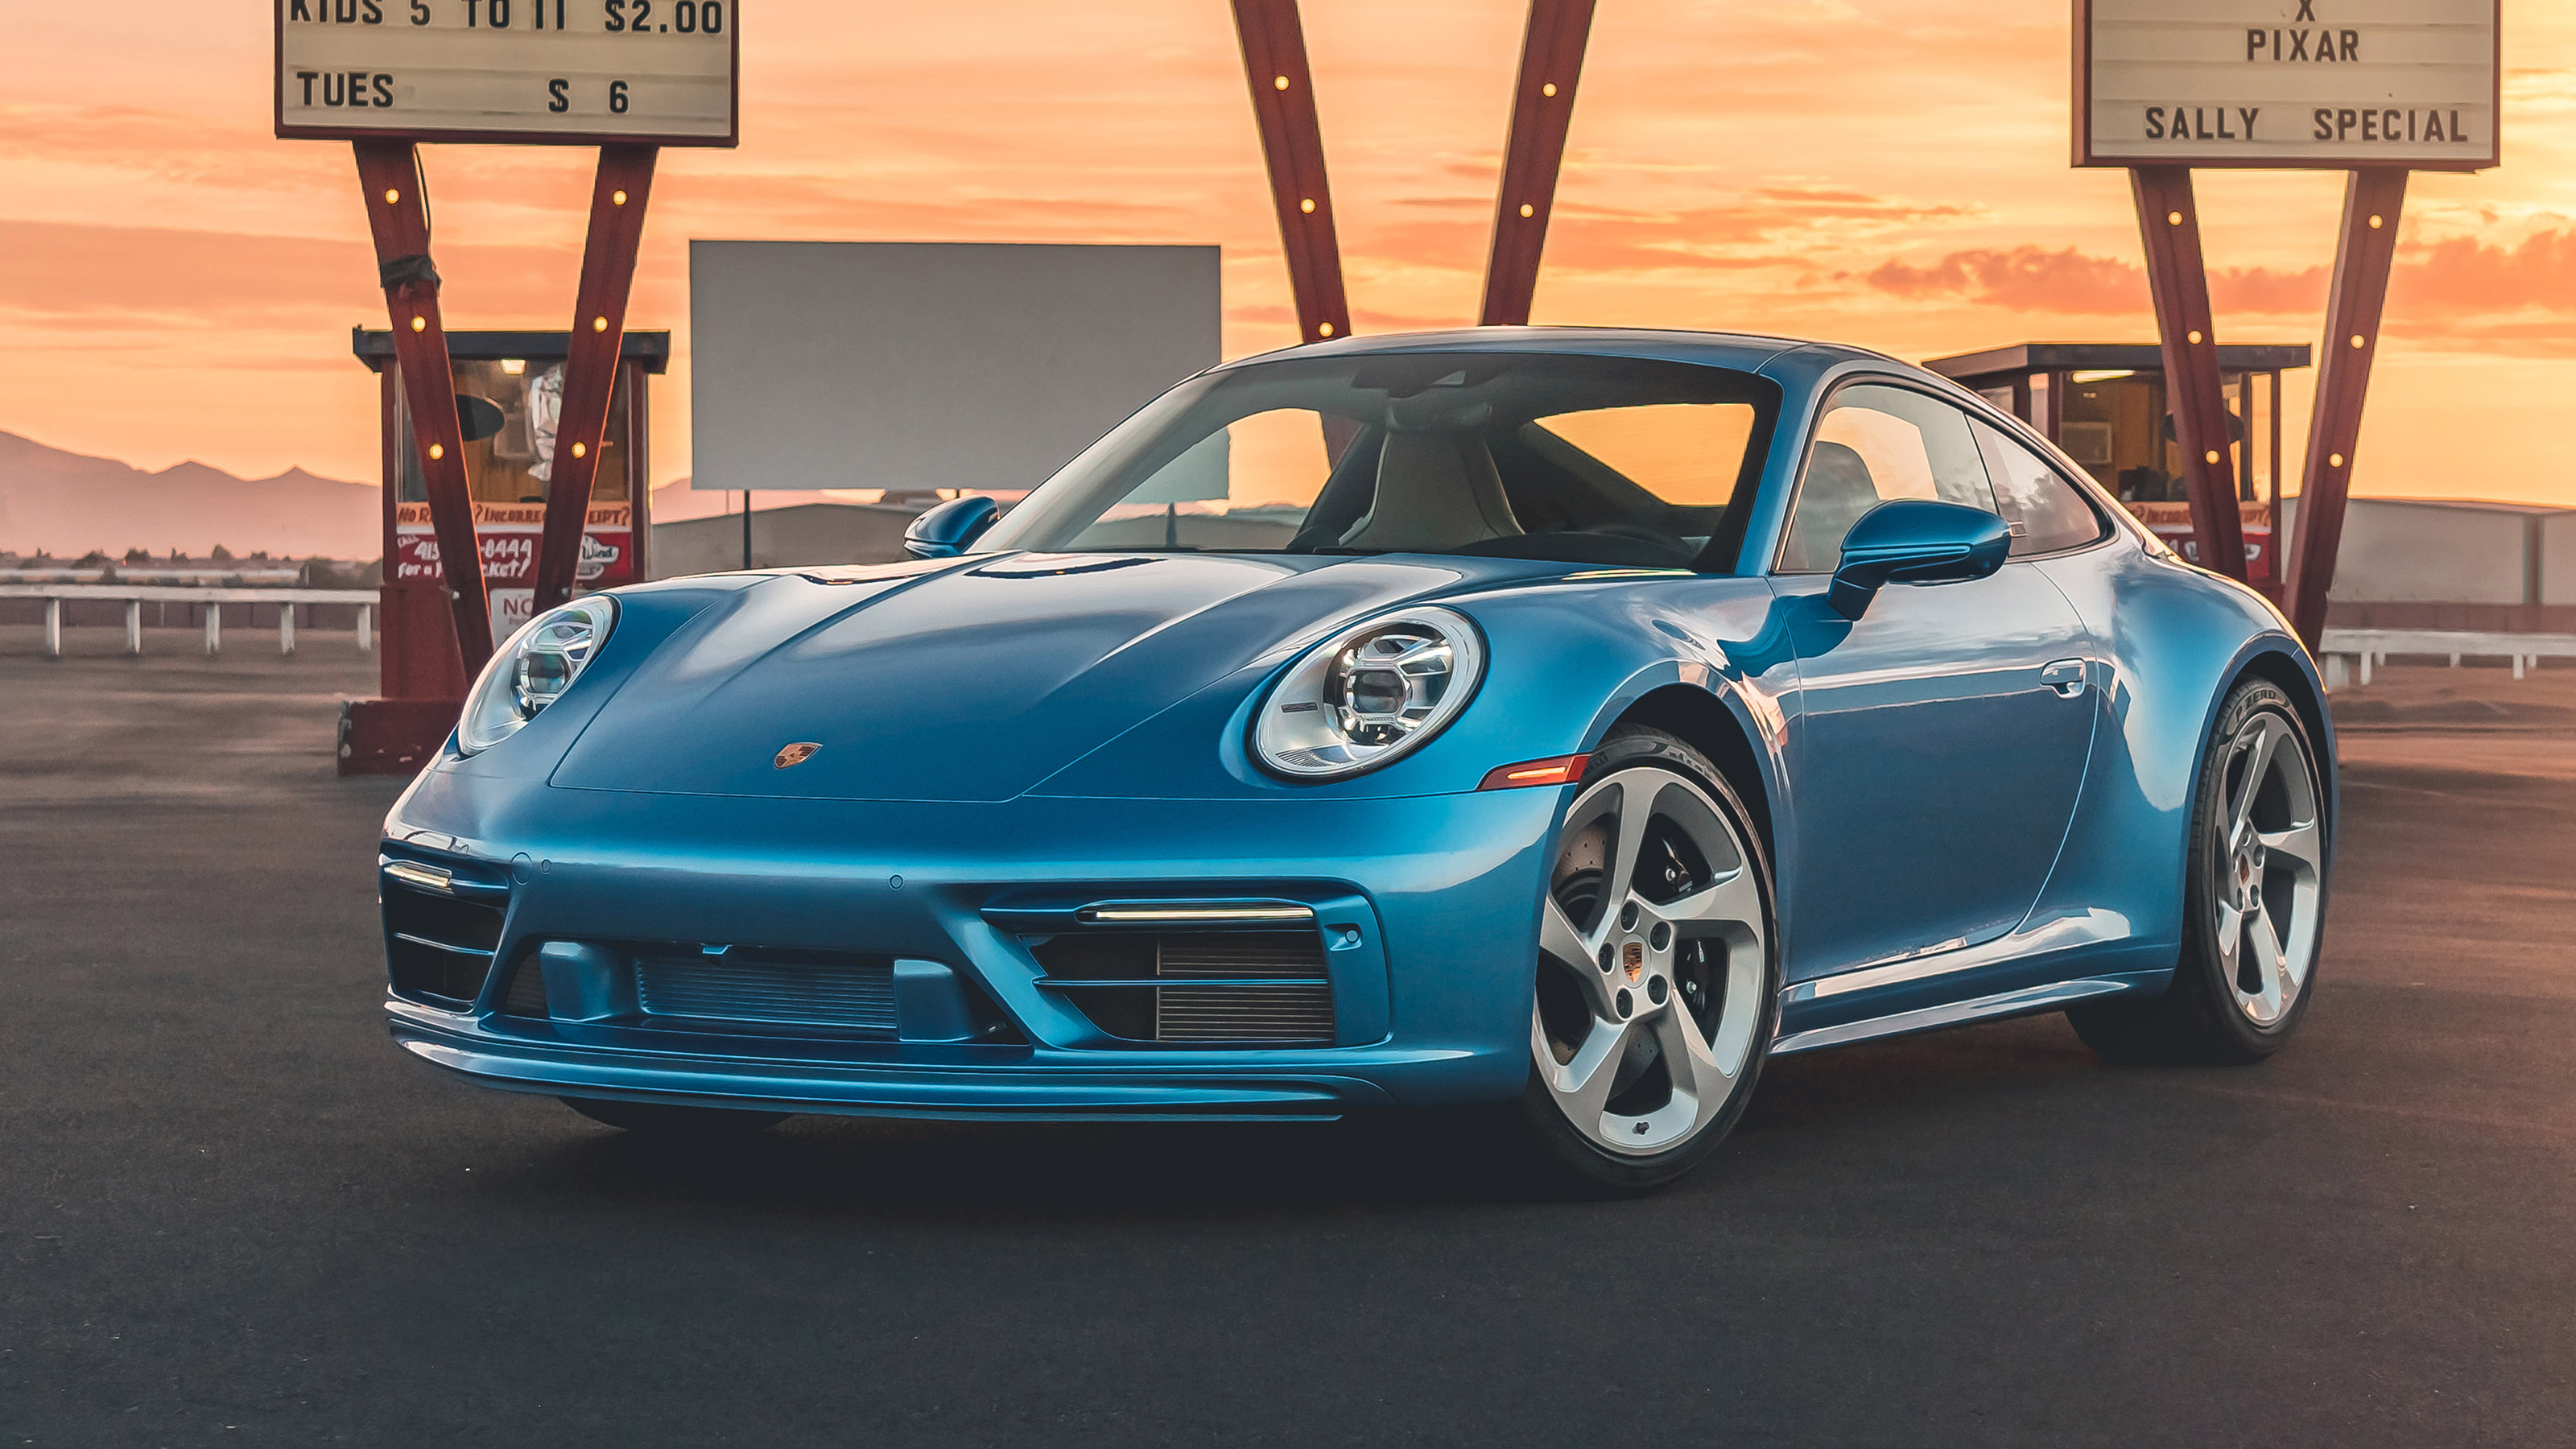 Porsche 911 Sally Carrera Special Edition sells for $ | evo